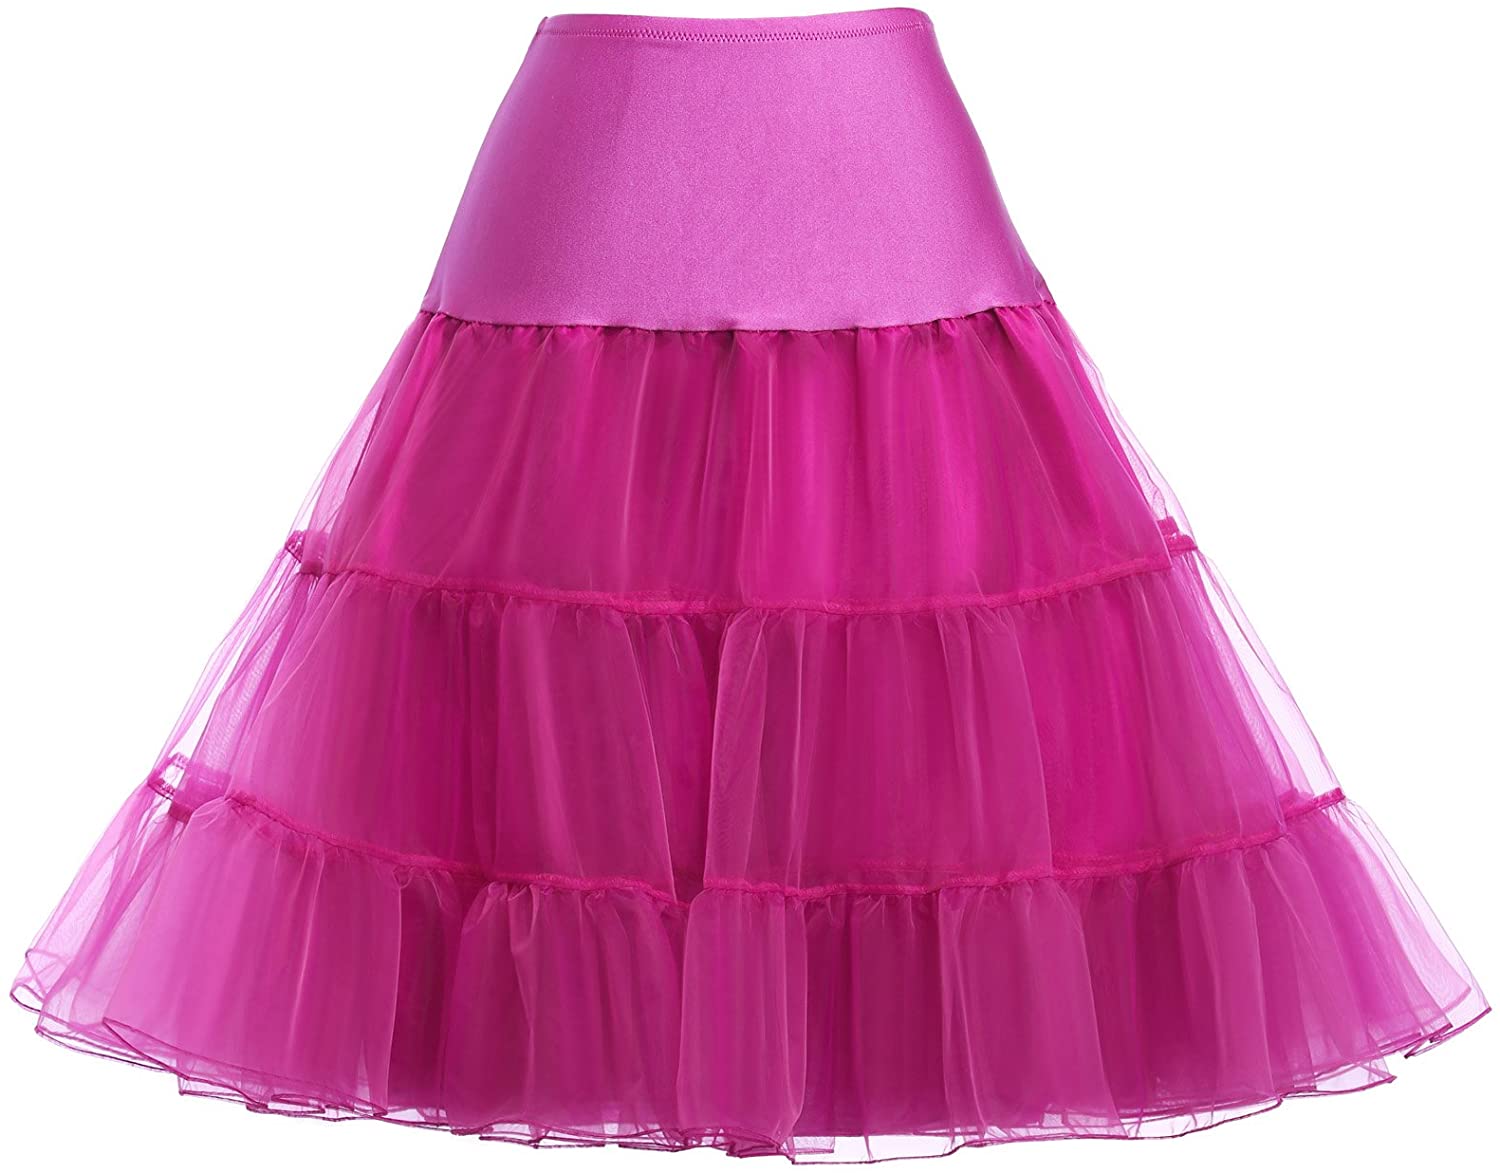 GRACE KARIN Womens 50s Petticoat Vintage Crinoline Tutu Underskirts